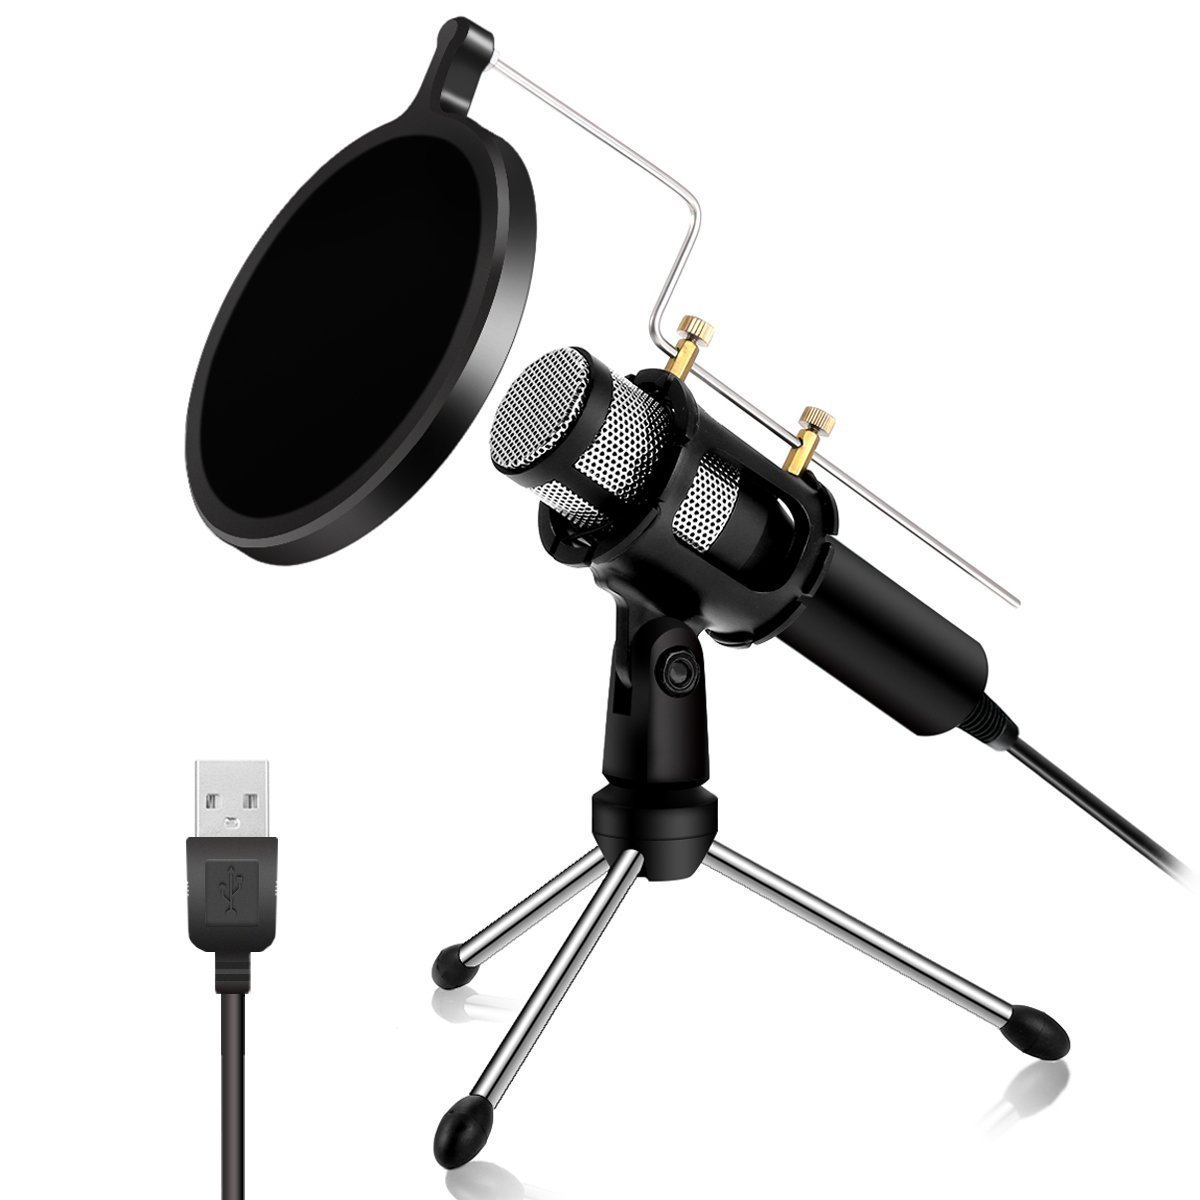 Professional Condenser Microphone [Nasum USB Plug and Play Home Studio] for Windows/Mac - Professional Studio Microphone